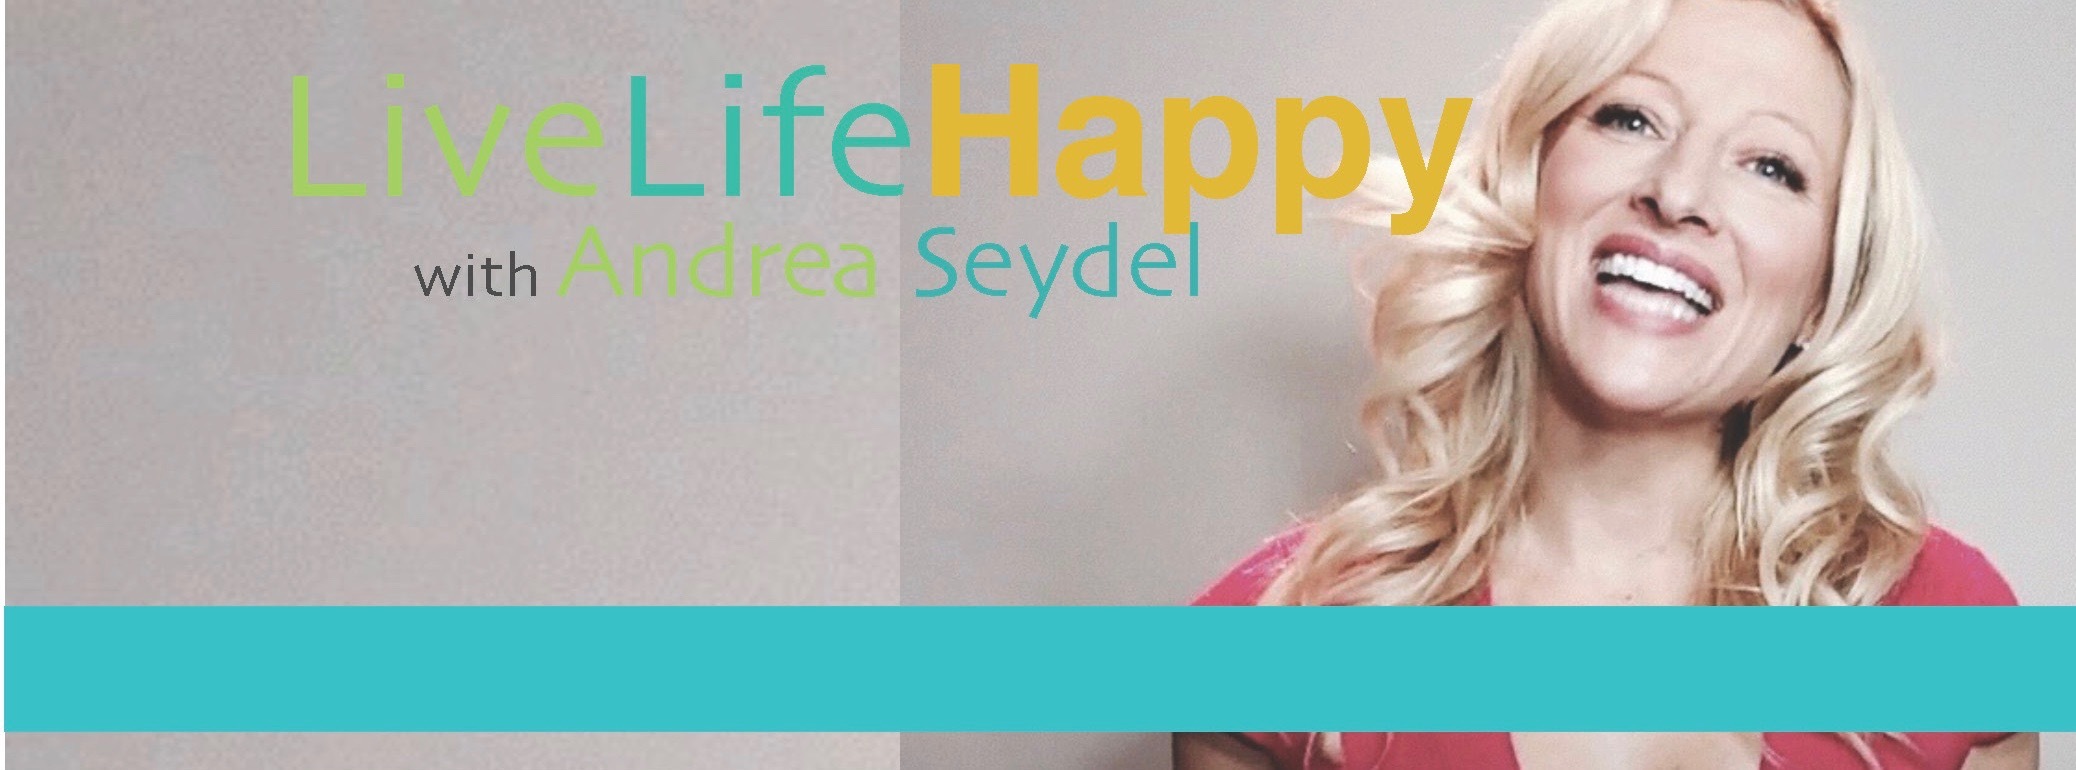 Live Life Happy- Andrea Seydel